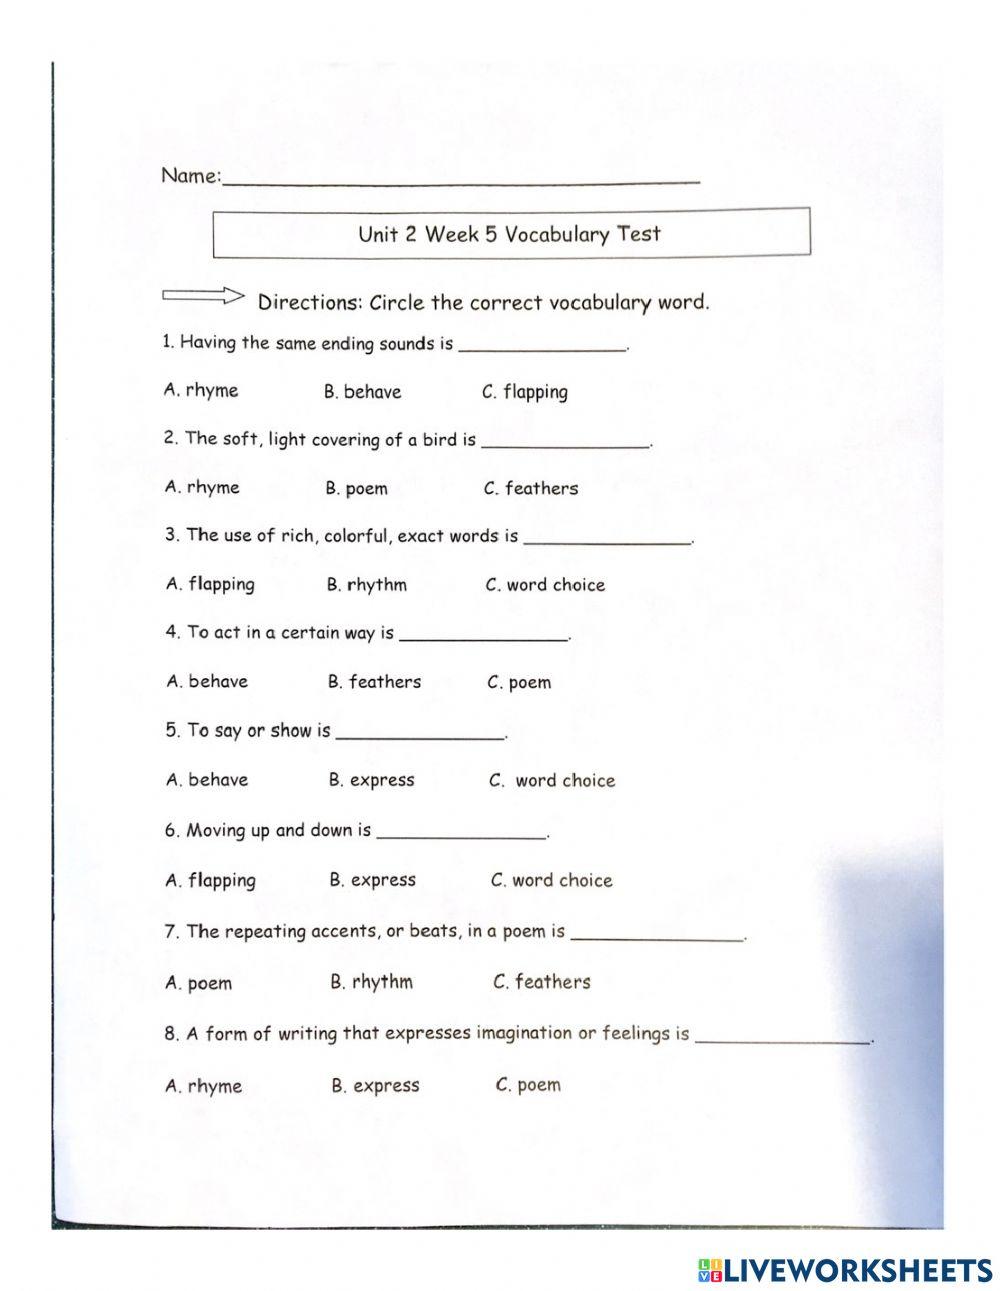 Reading wonders Unit 2 week 5 Vocabulary test